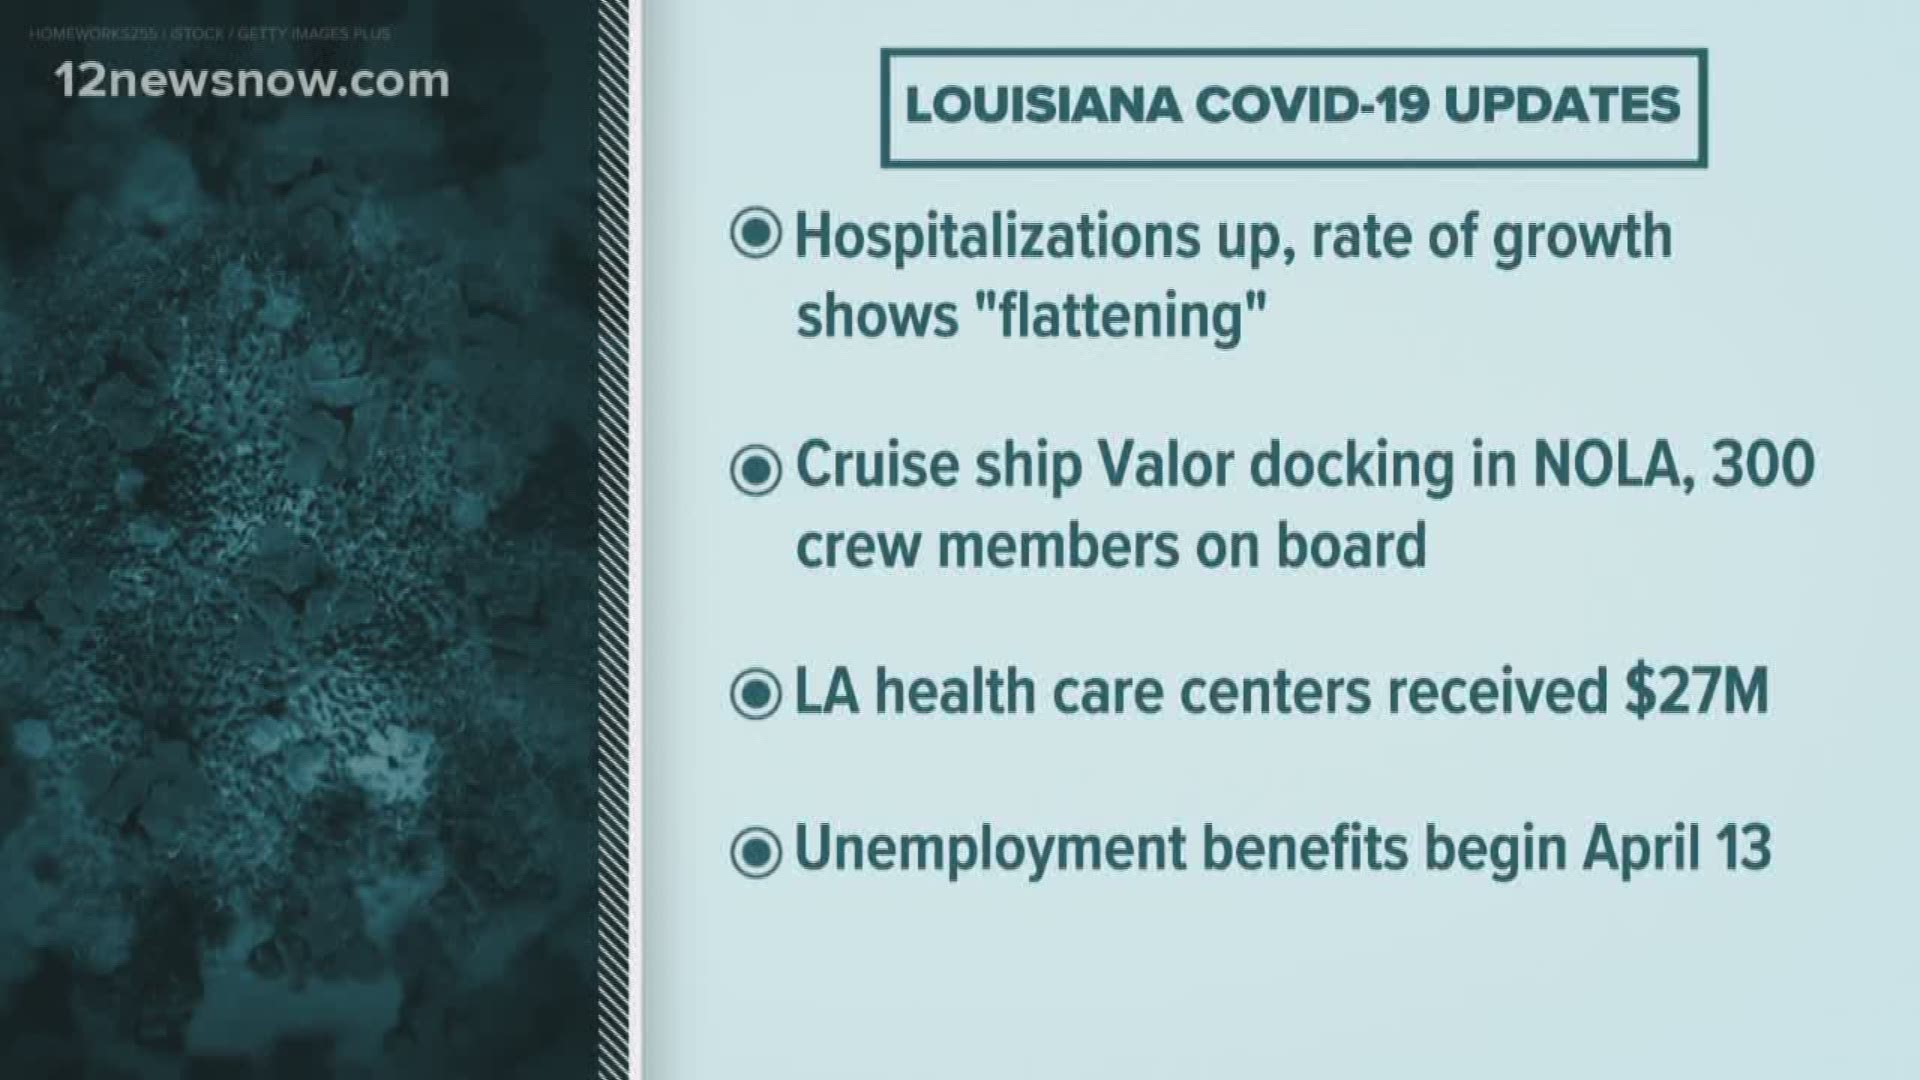 Louisiana health care centers received $27 million